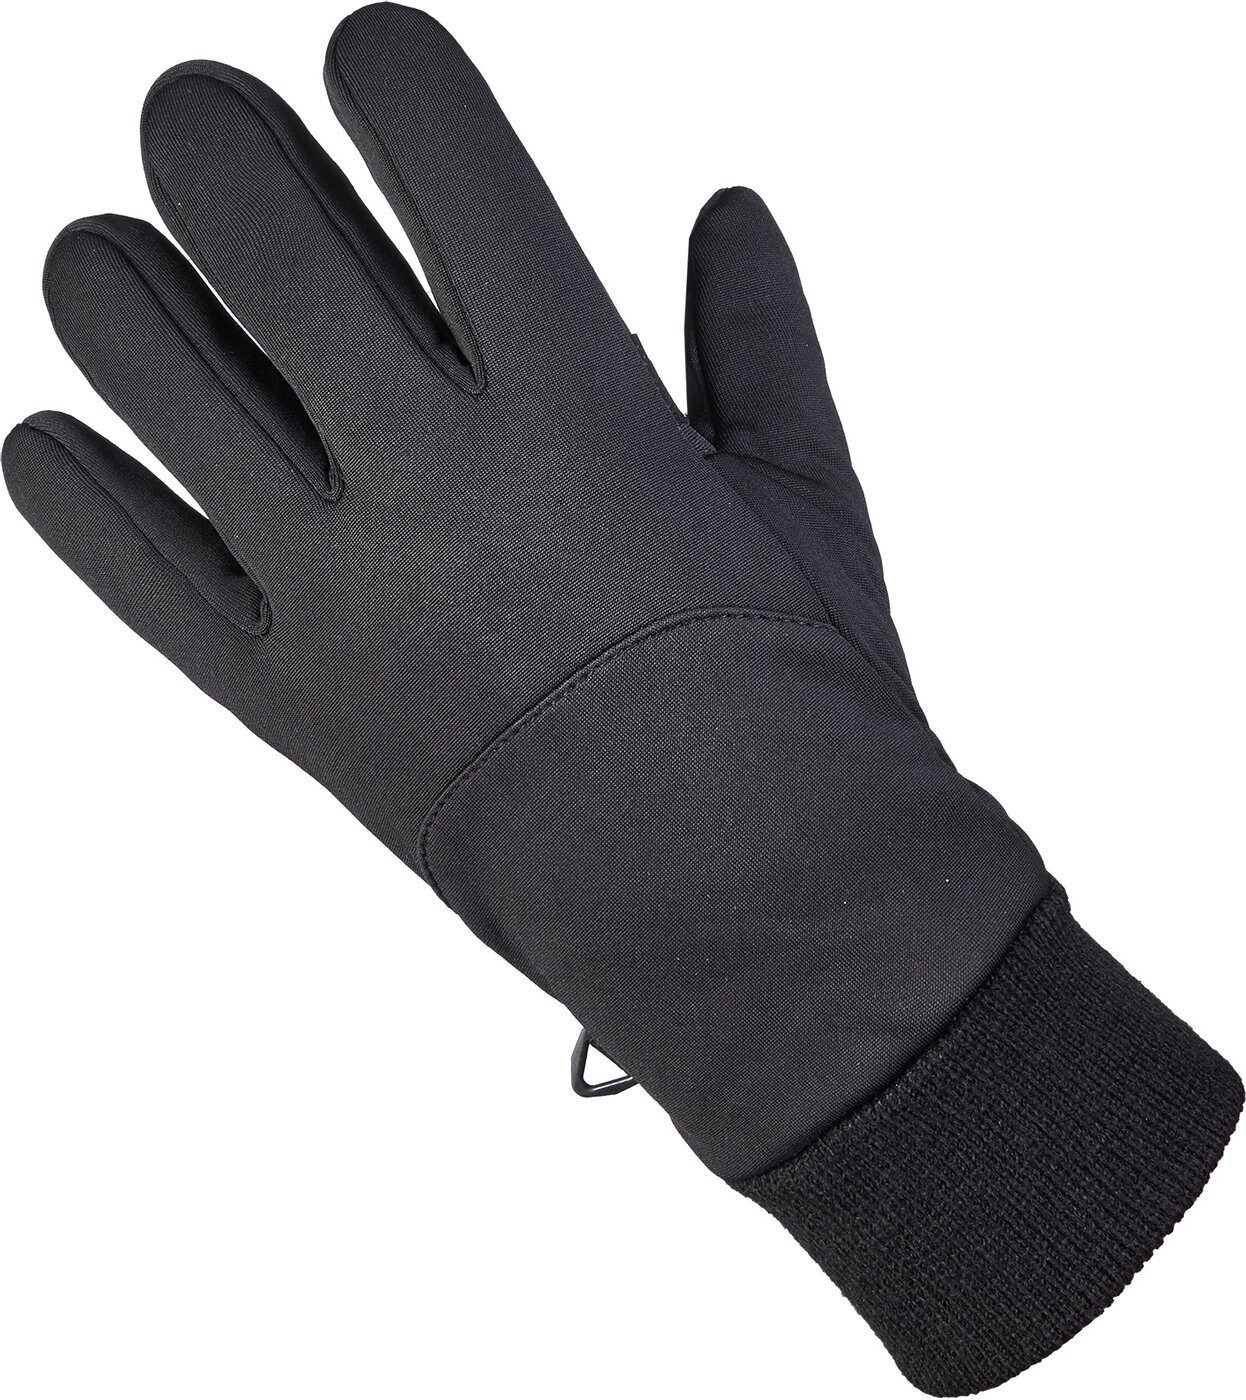 Areco Multisporthandschuhe Handschuh